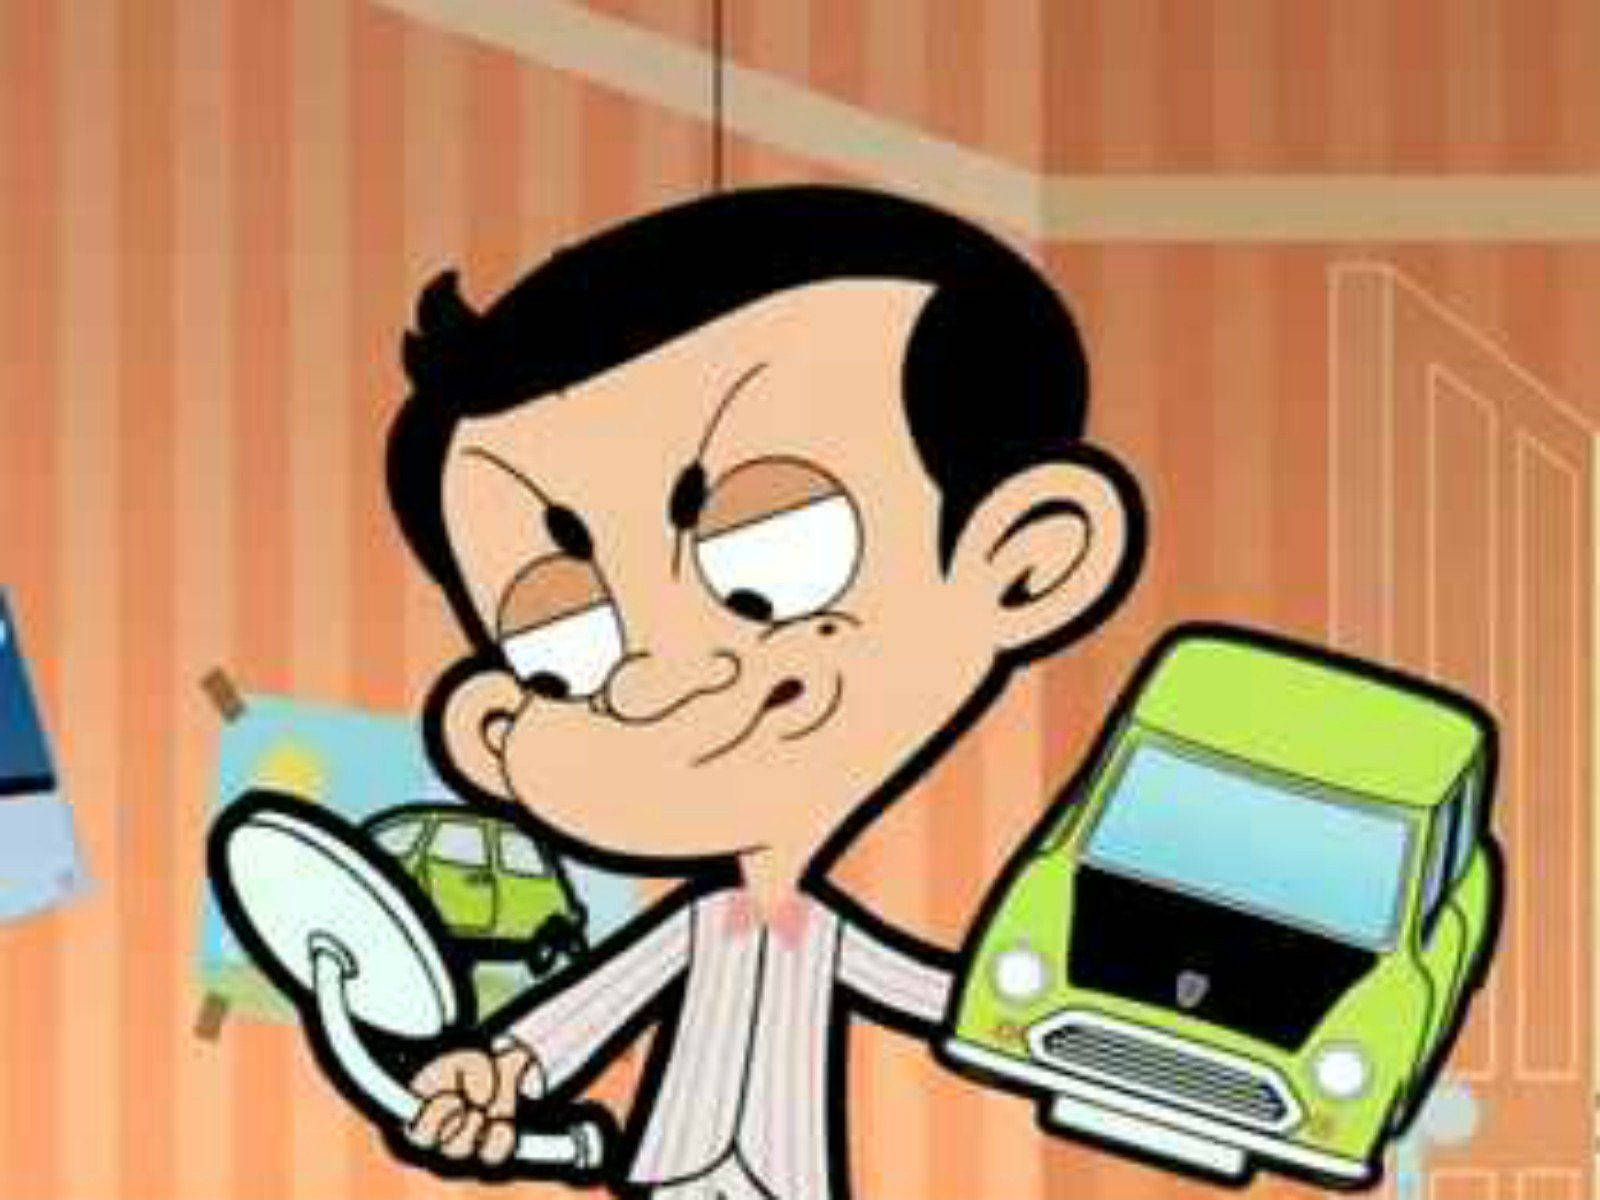 Mr. Bean Cartoon Confused Toy Wallpaper